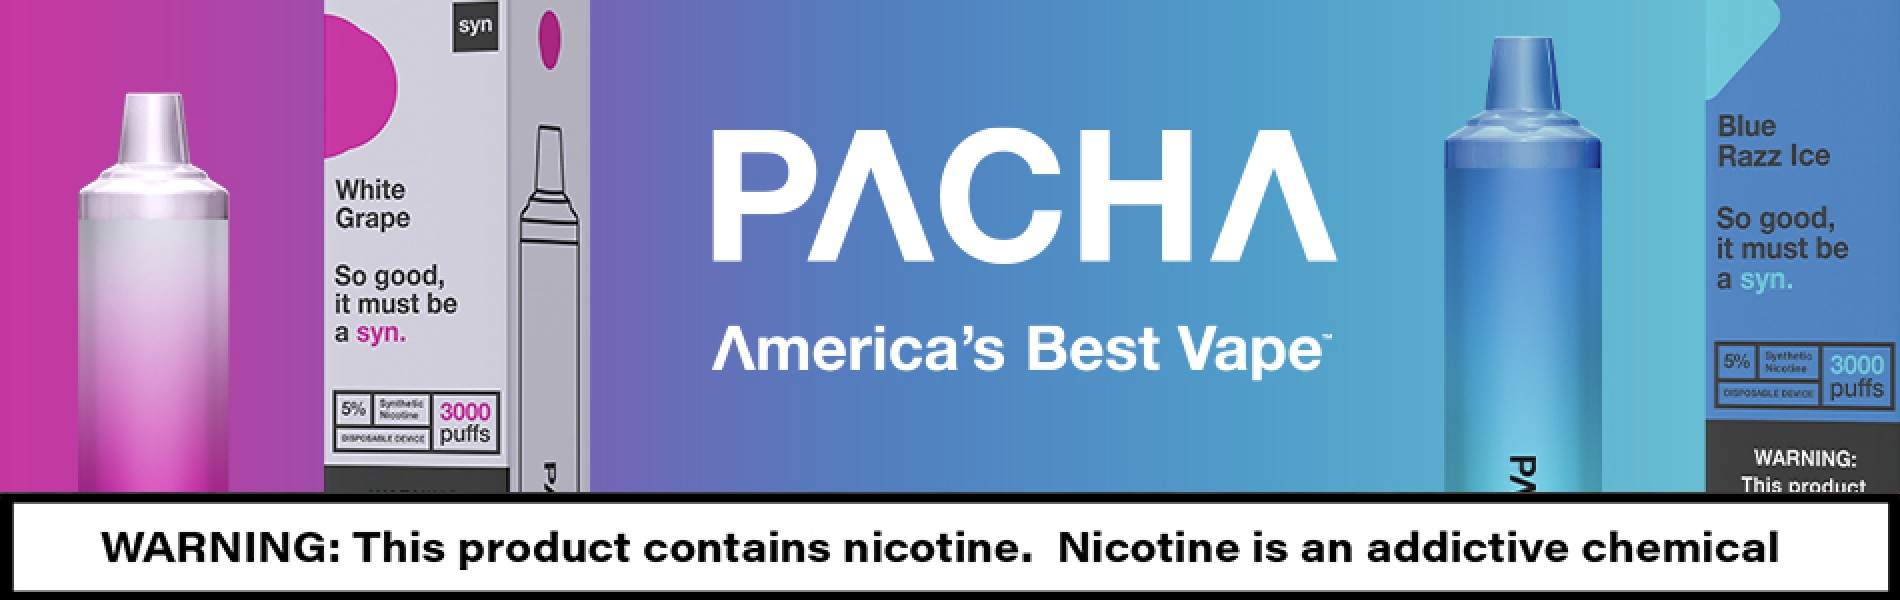 Pacha Disposables - America's Best Vape